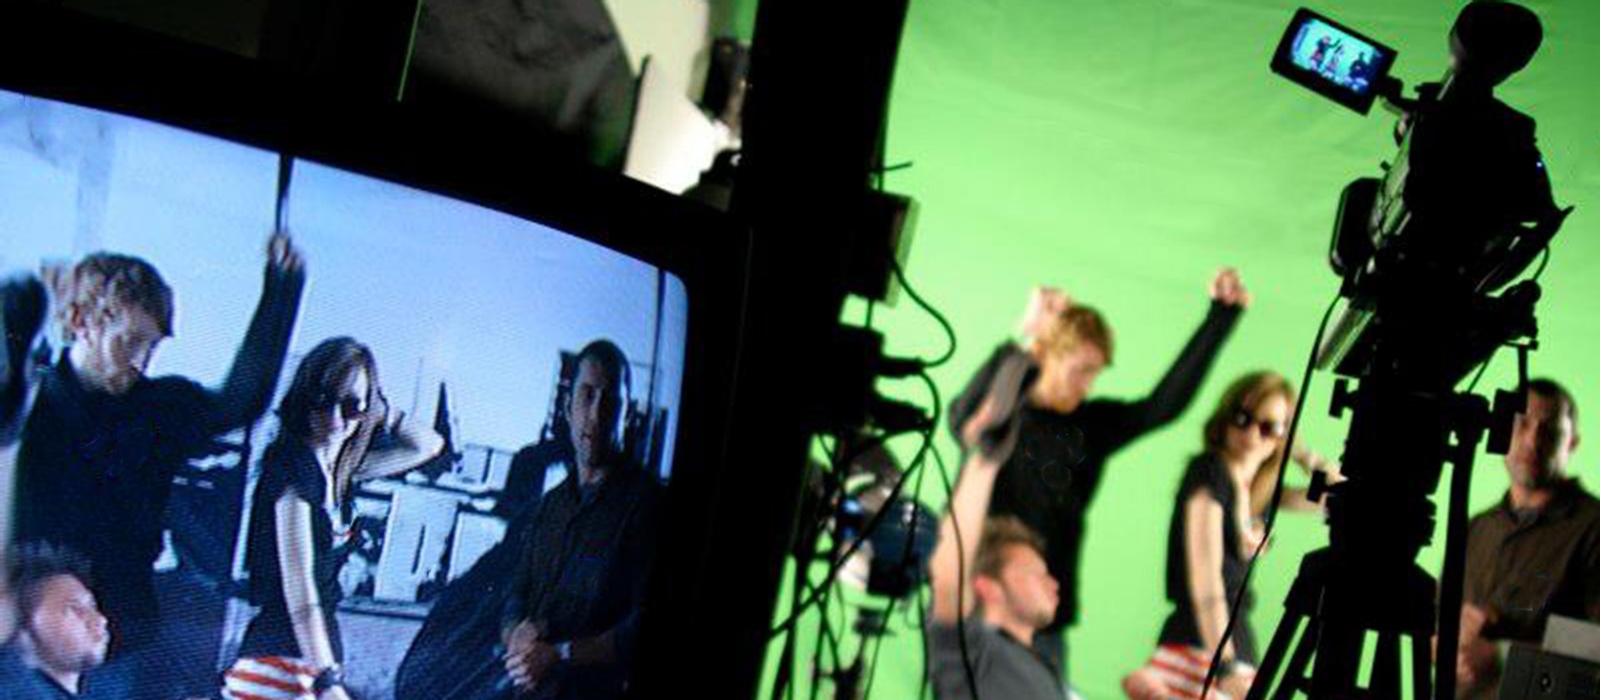 green screen production video shoot